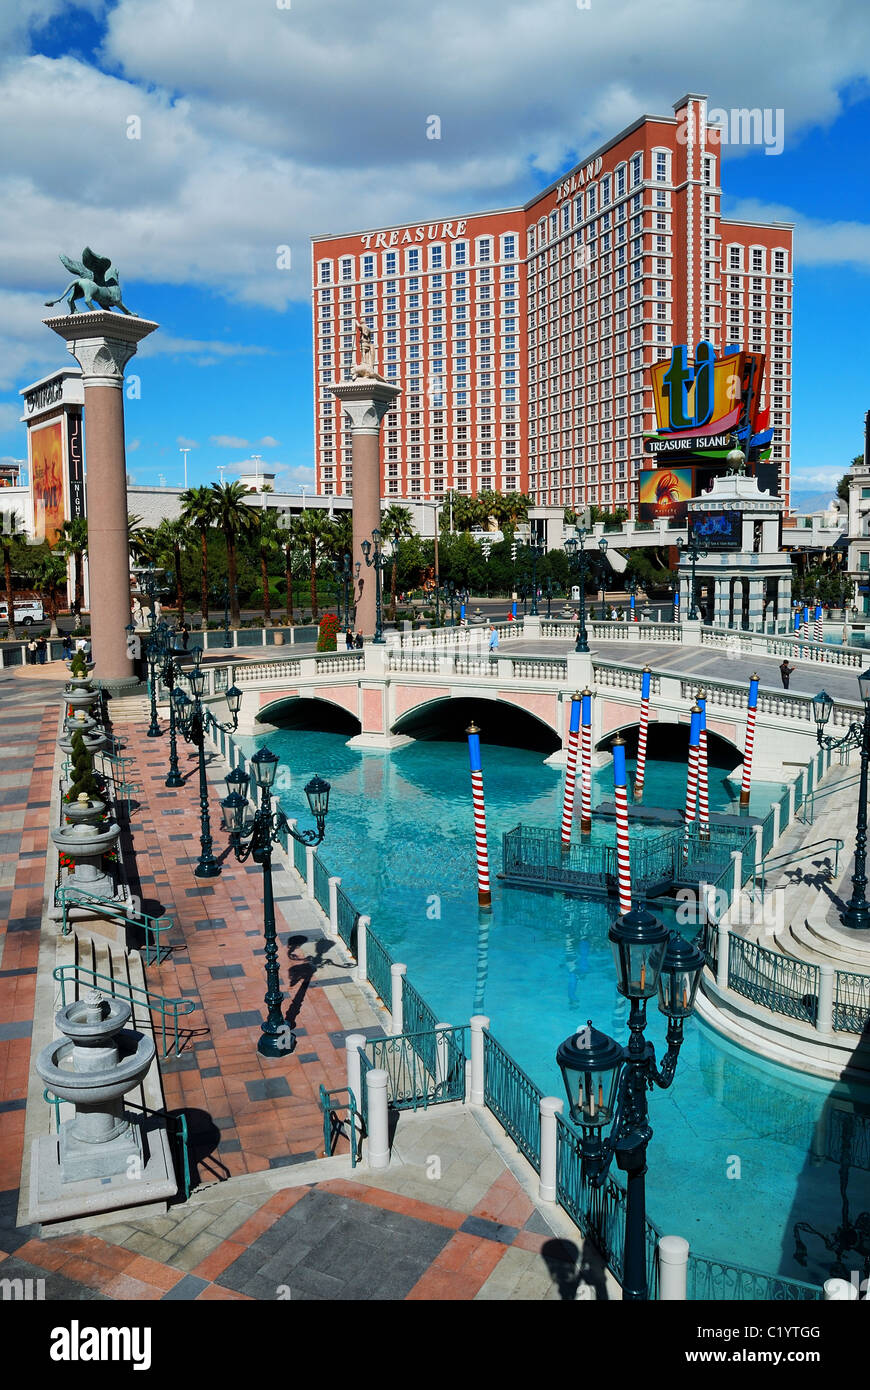 Treasure Island located in the center of Vegas Strip as the famous landmark  in Las Vegas, Nevada Stock Photo - Alamy